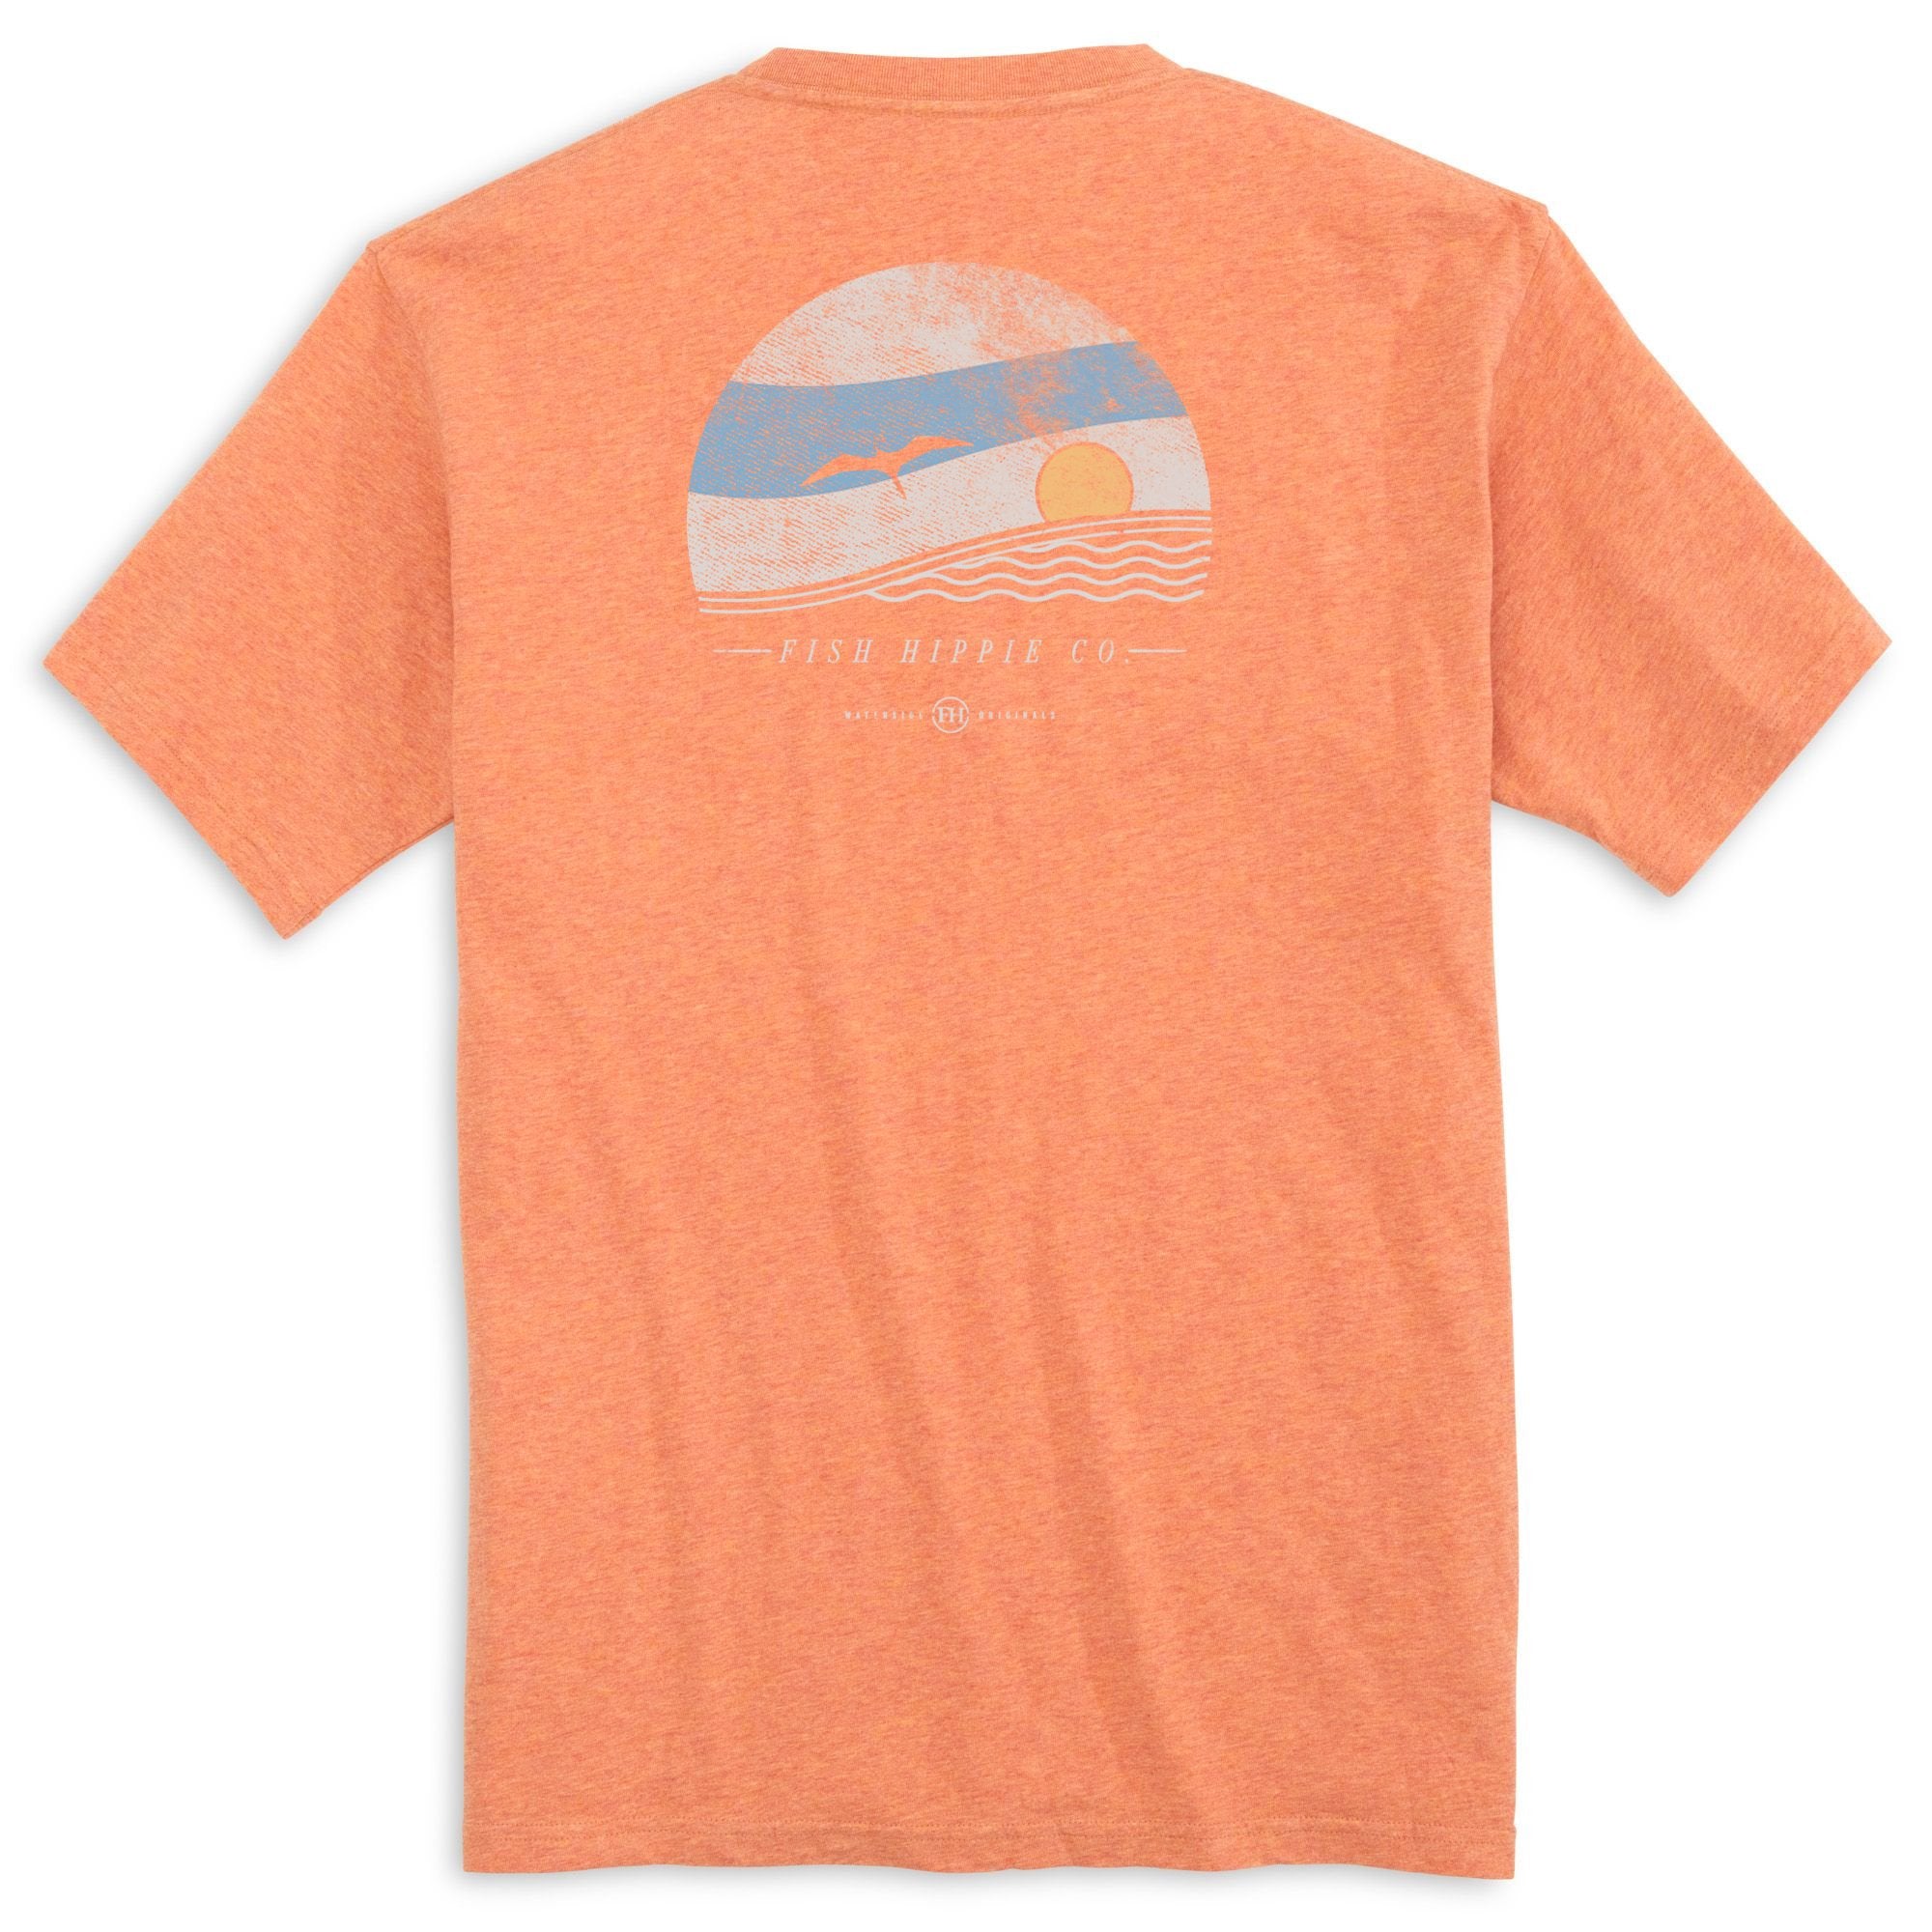 Fish Hippie Rise T-Shirt